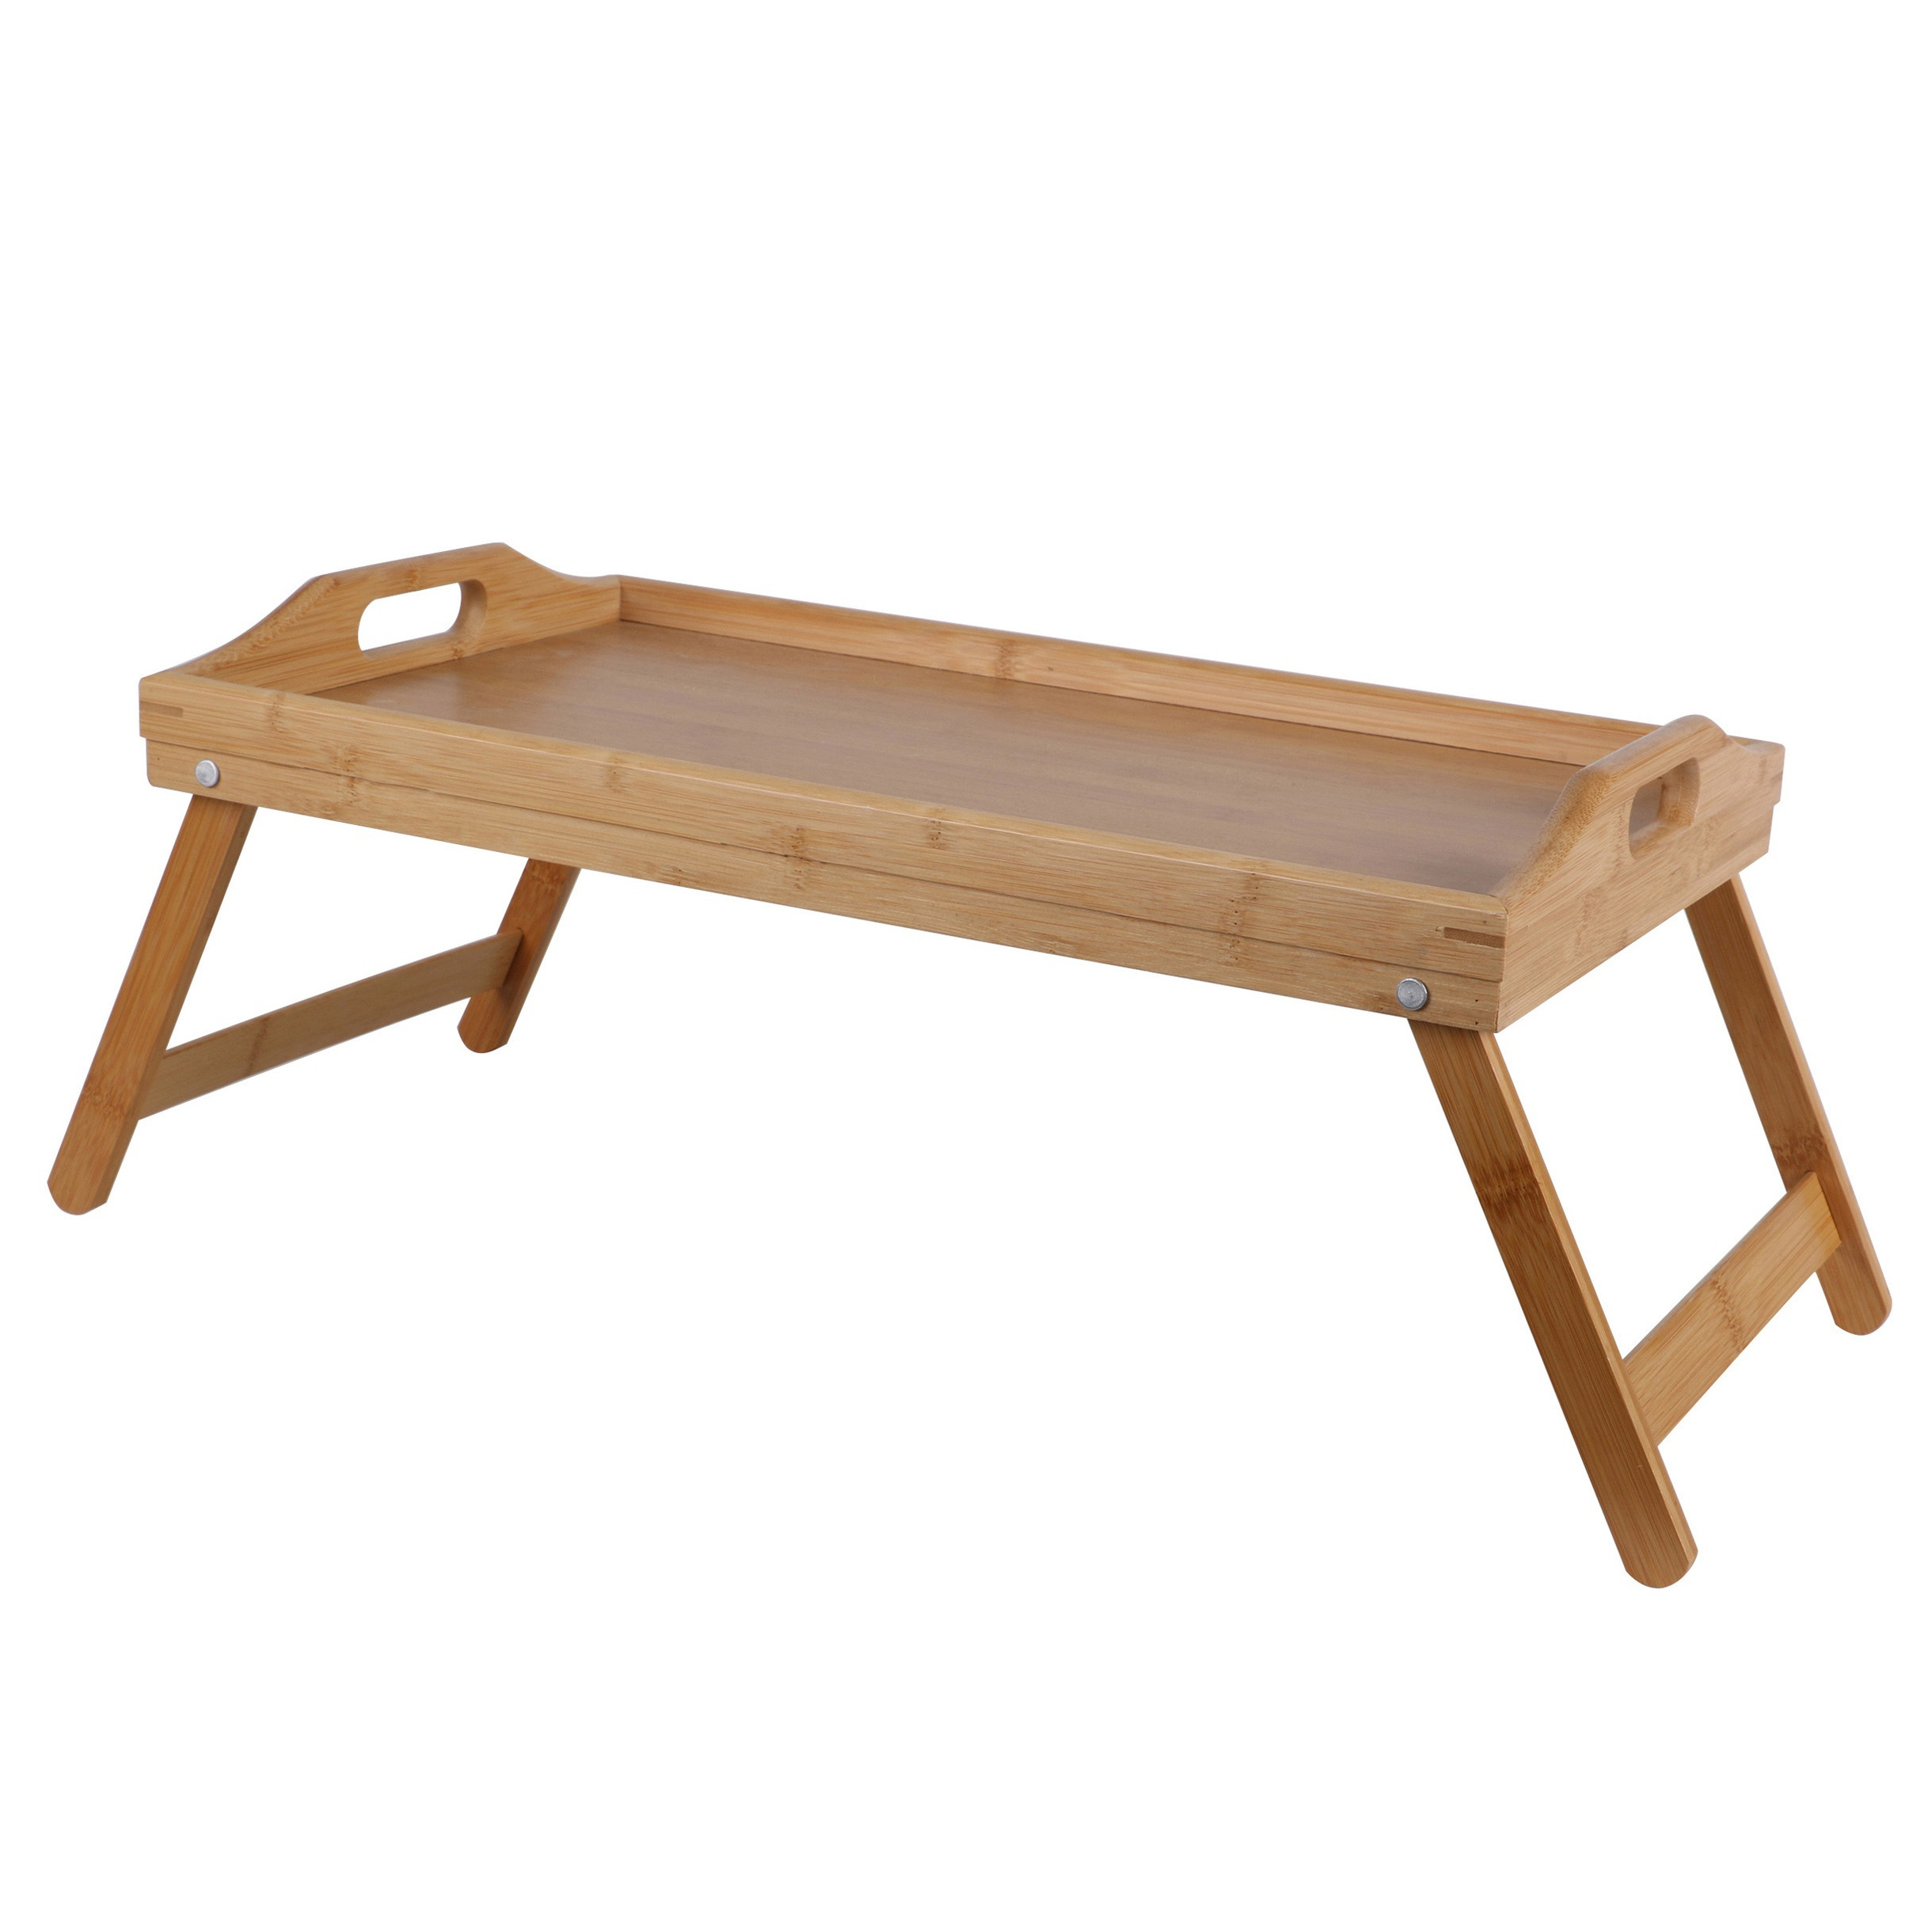 Ontbijt op bed-laptop tafeltje-dienblad op pootjes 53 x 33 x 21 cm bamboe hout serveer tray